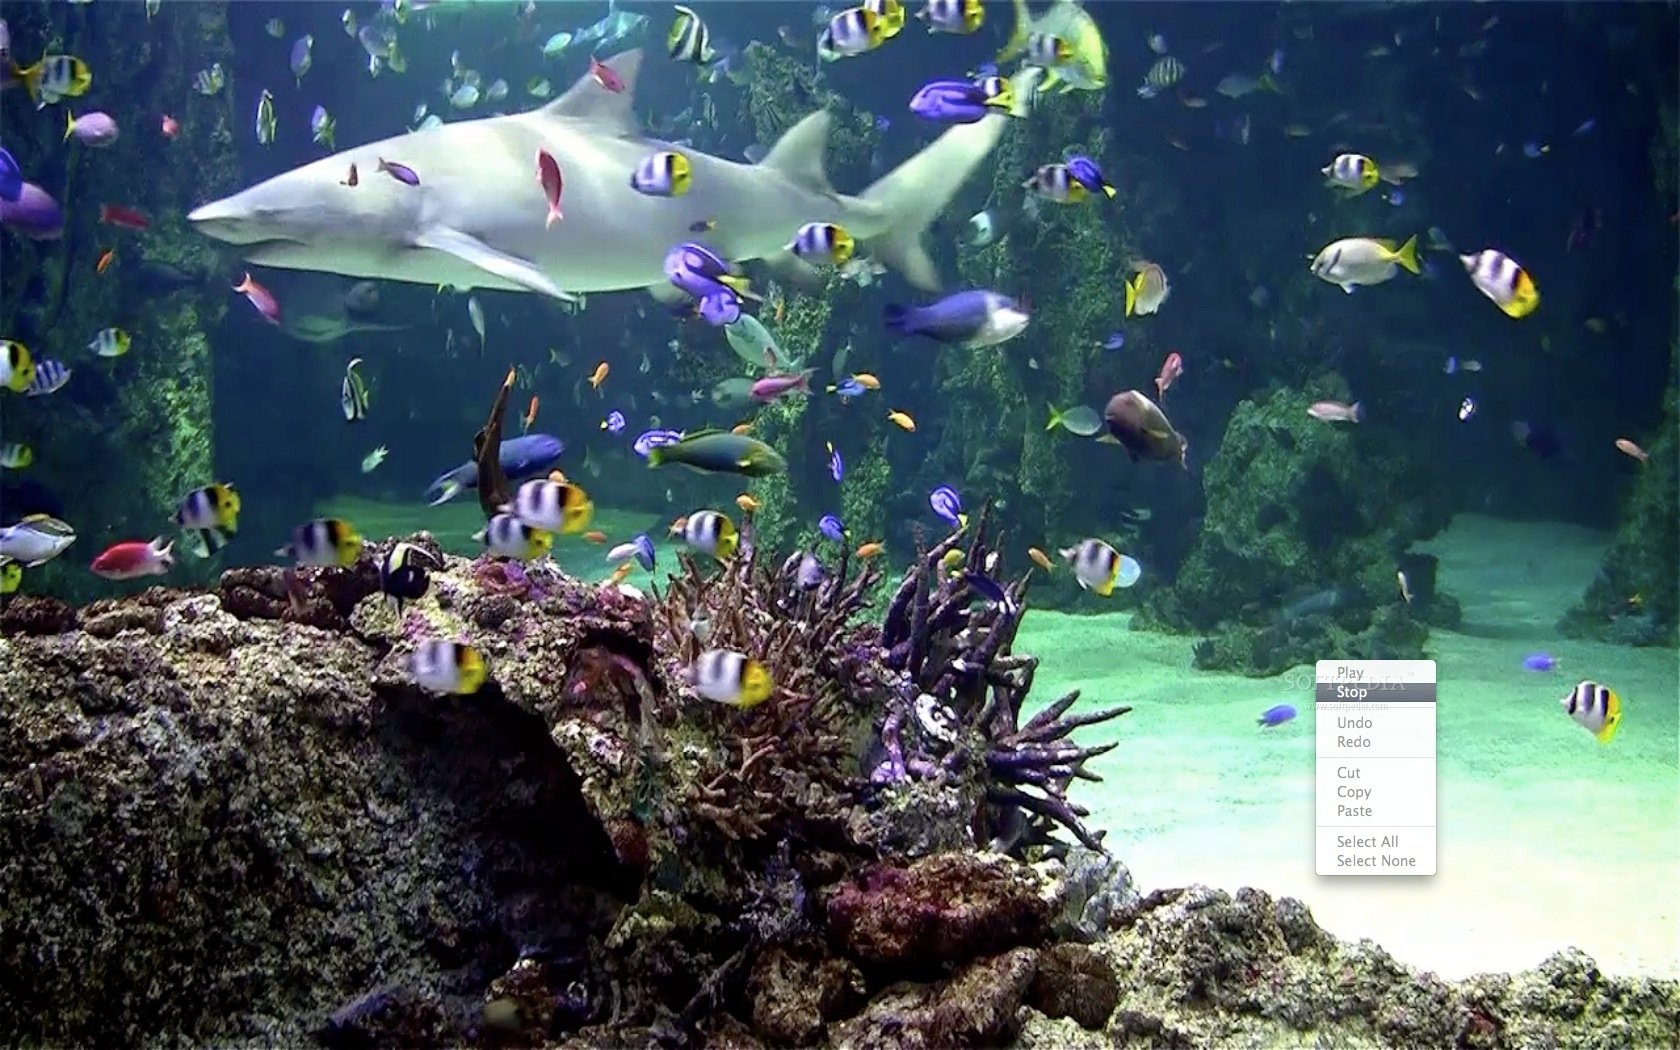 aquarium live wallpaper hd,fisch,meeresbiologie,fisch,aquarium,unter wasser